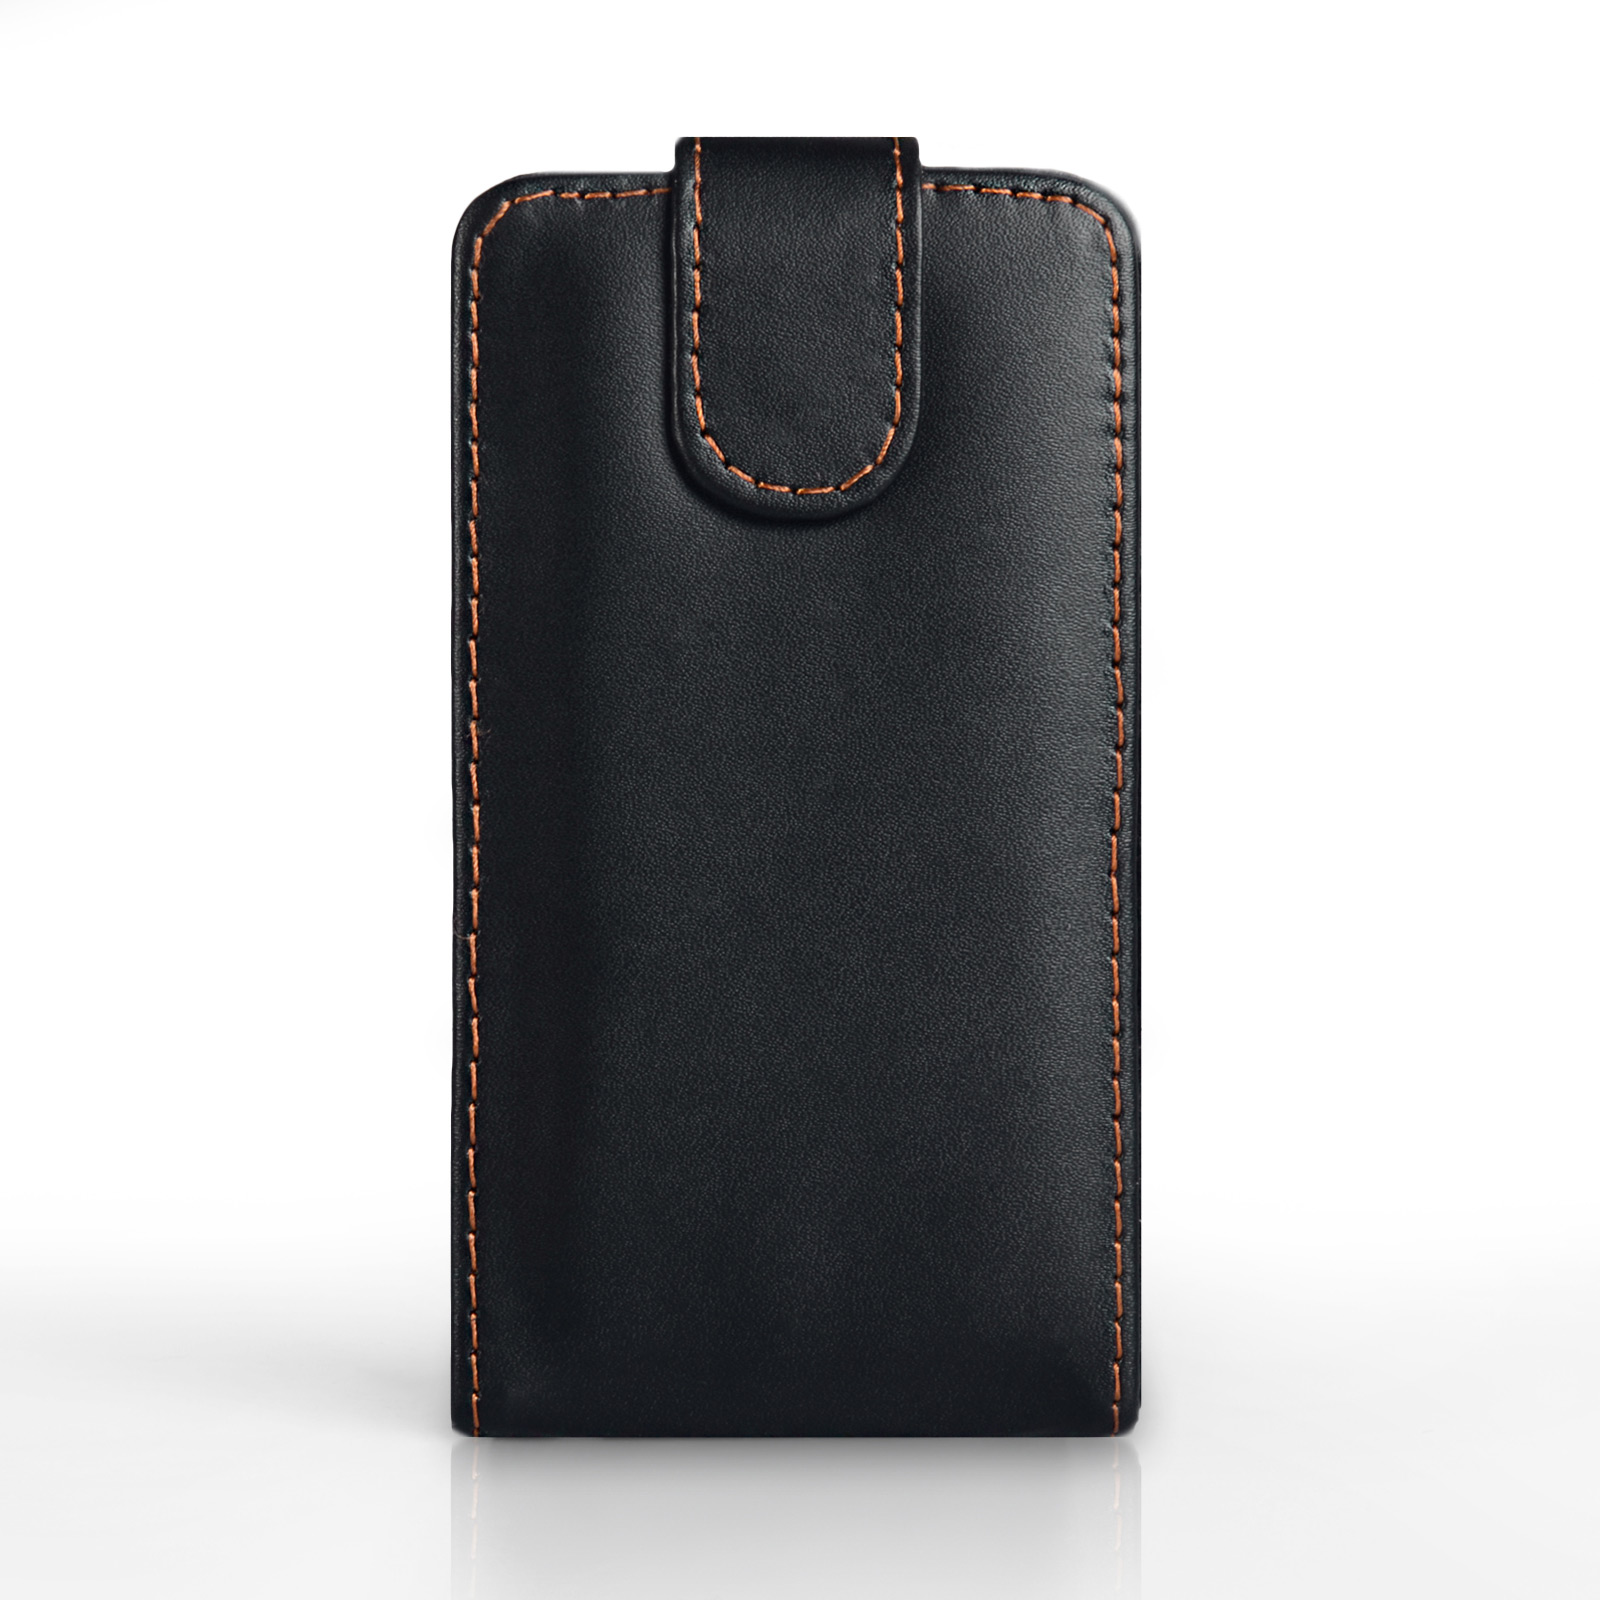 YouSave Accessories LG L70 Leather-Effect Flip Case - Black